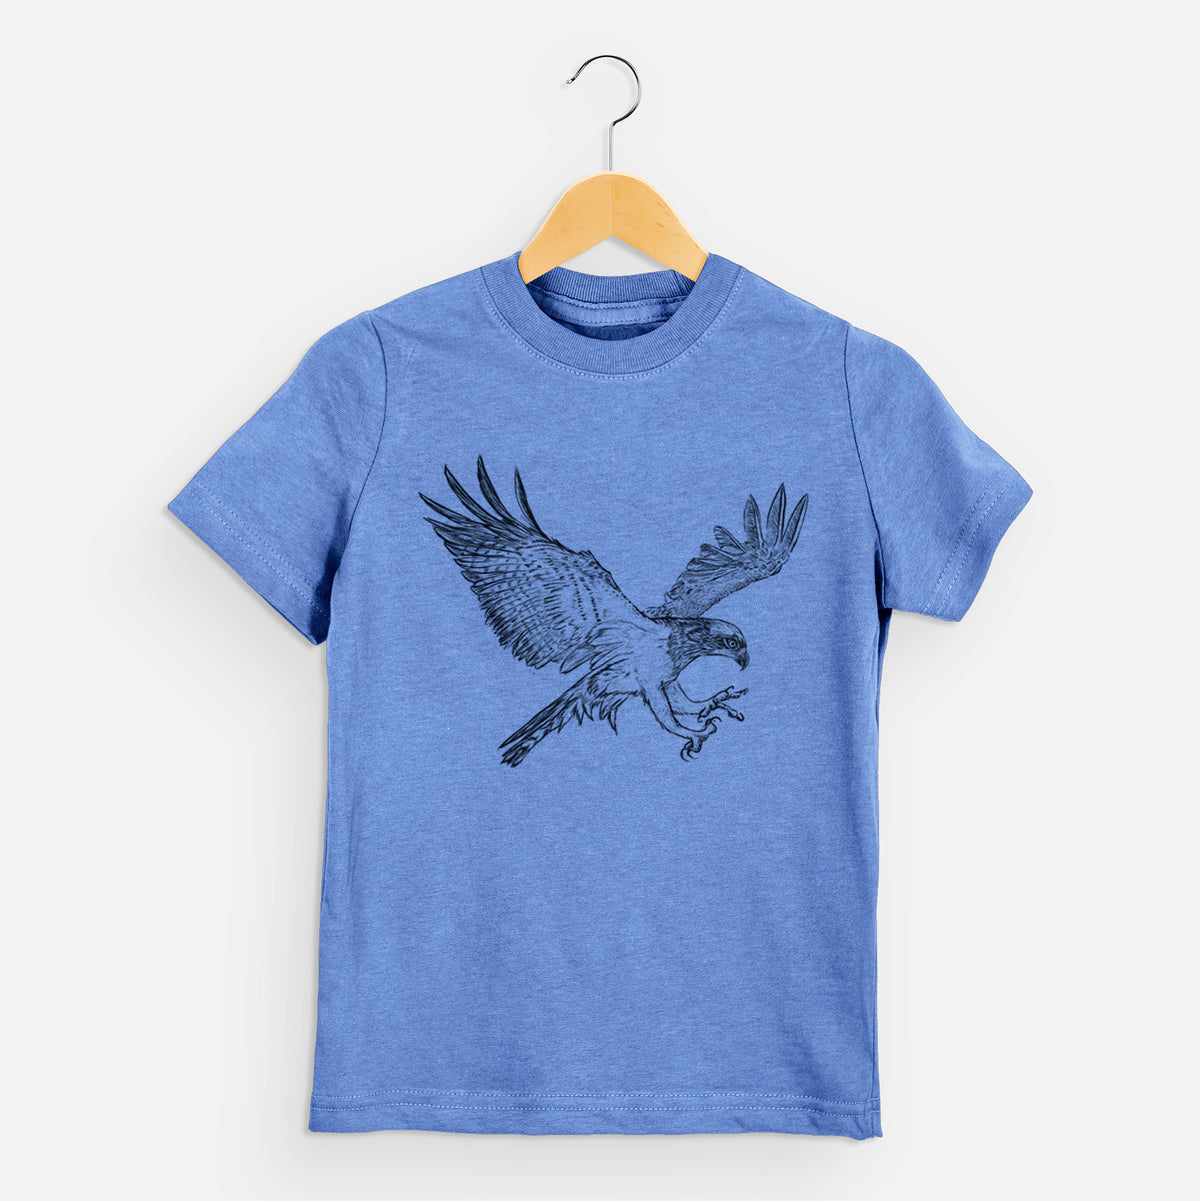 Osprey - Pandion haliaetus - Kids Shirt